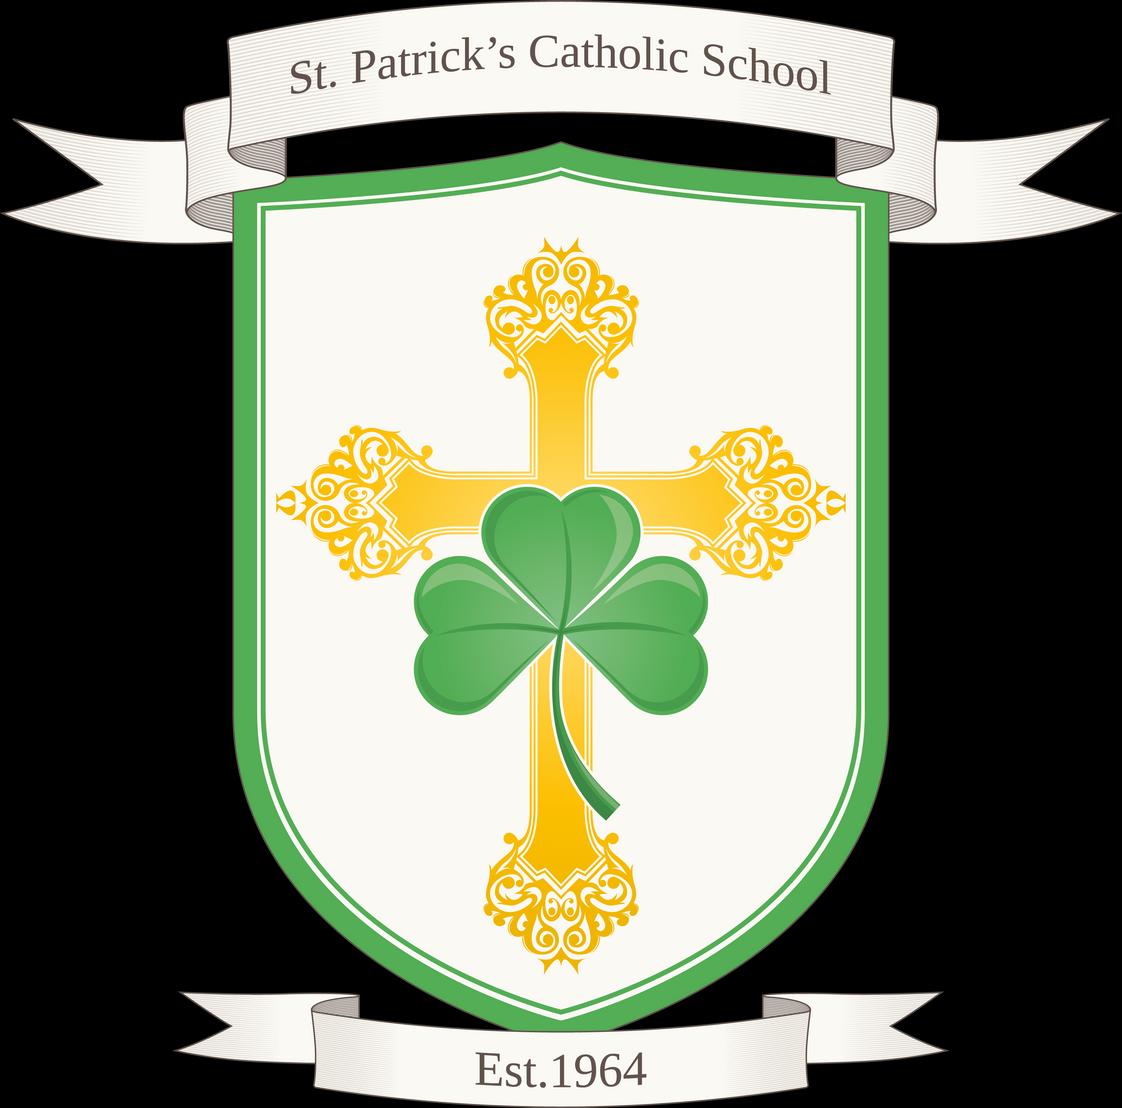 St. Patrick's Catholic School Photo #1 - Our new school logo